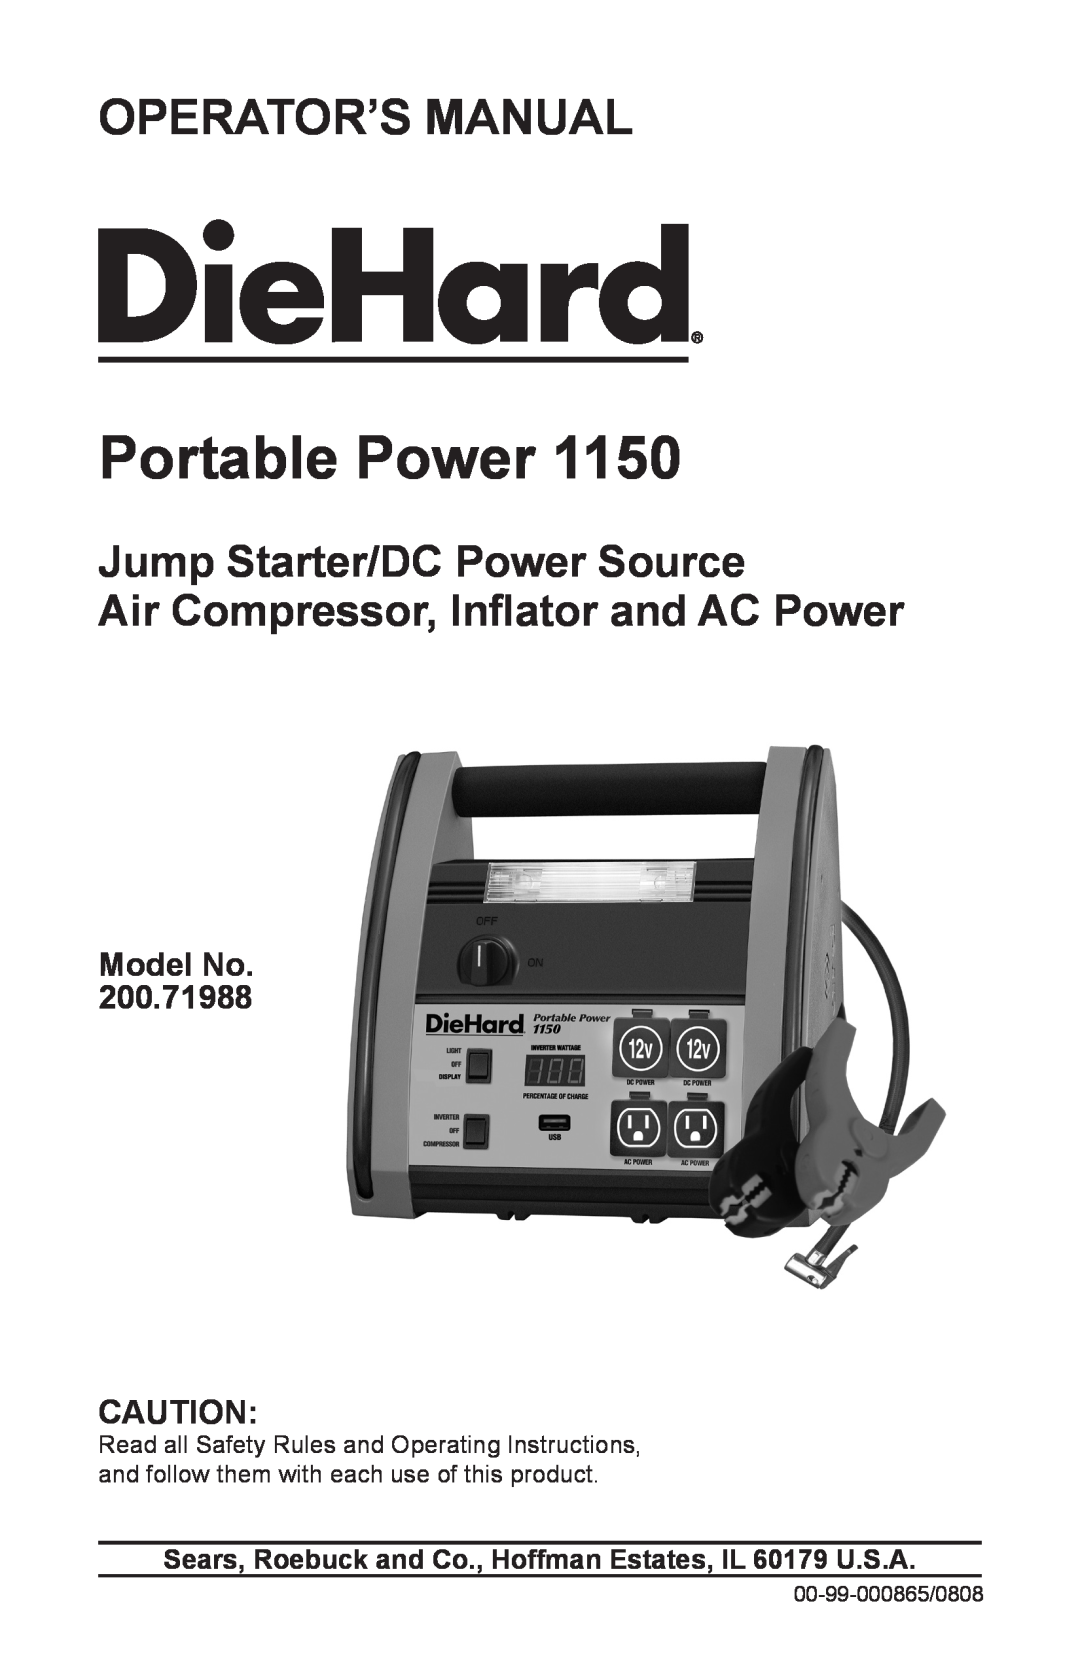 Sears 200.71988 manual Model No, Portable Power, Operator’S Manual 